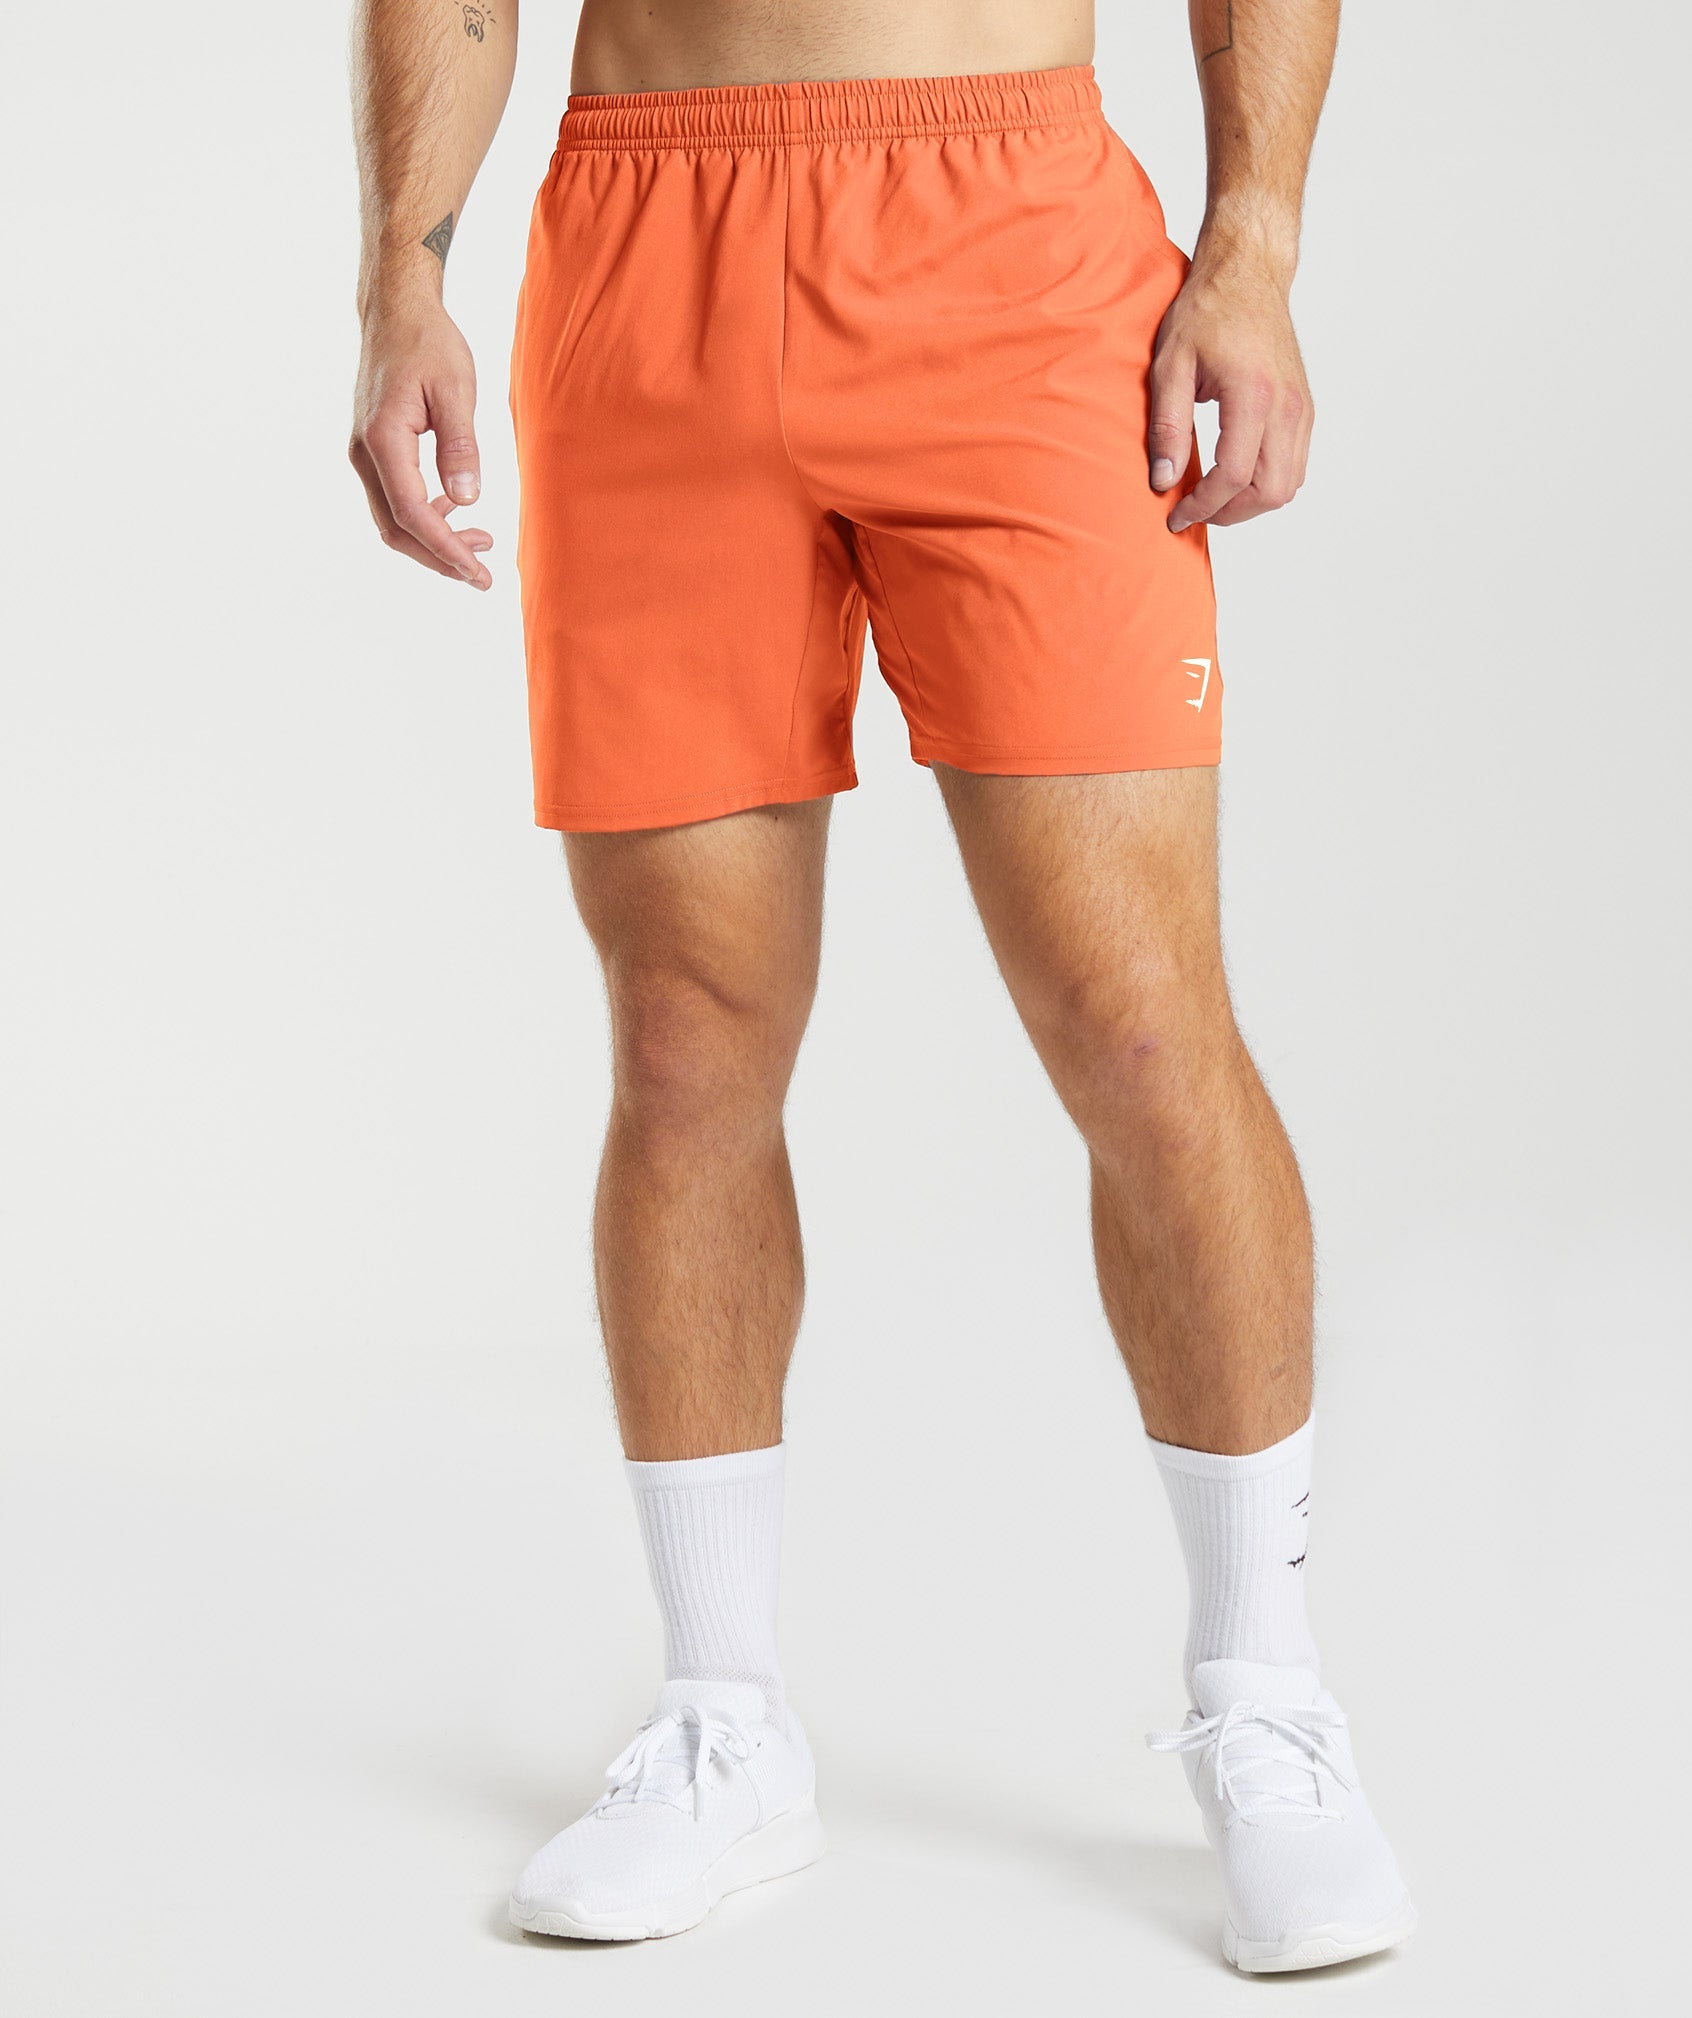 Gymshark Arrival 7 Shorts - Ignite Orange